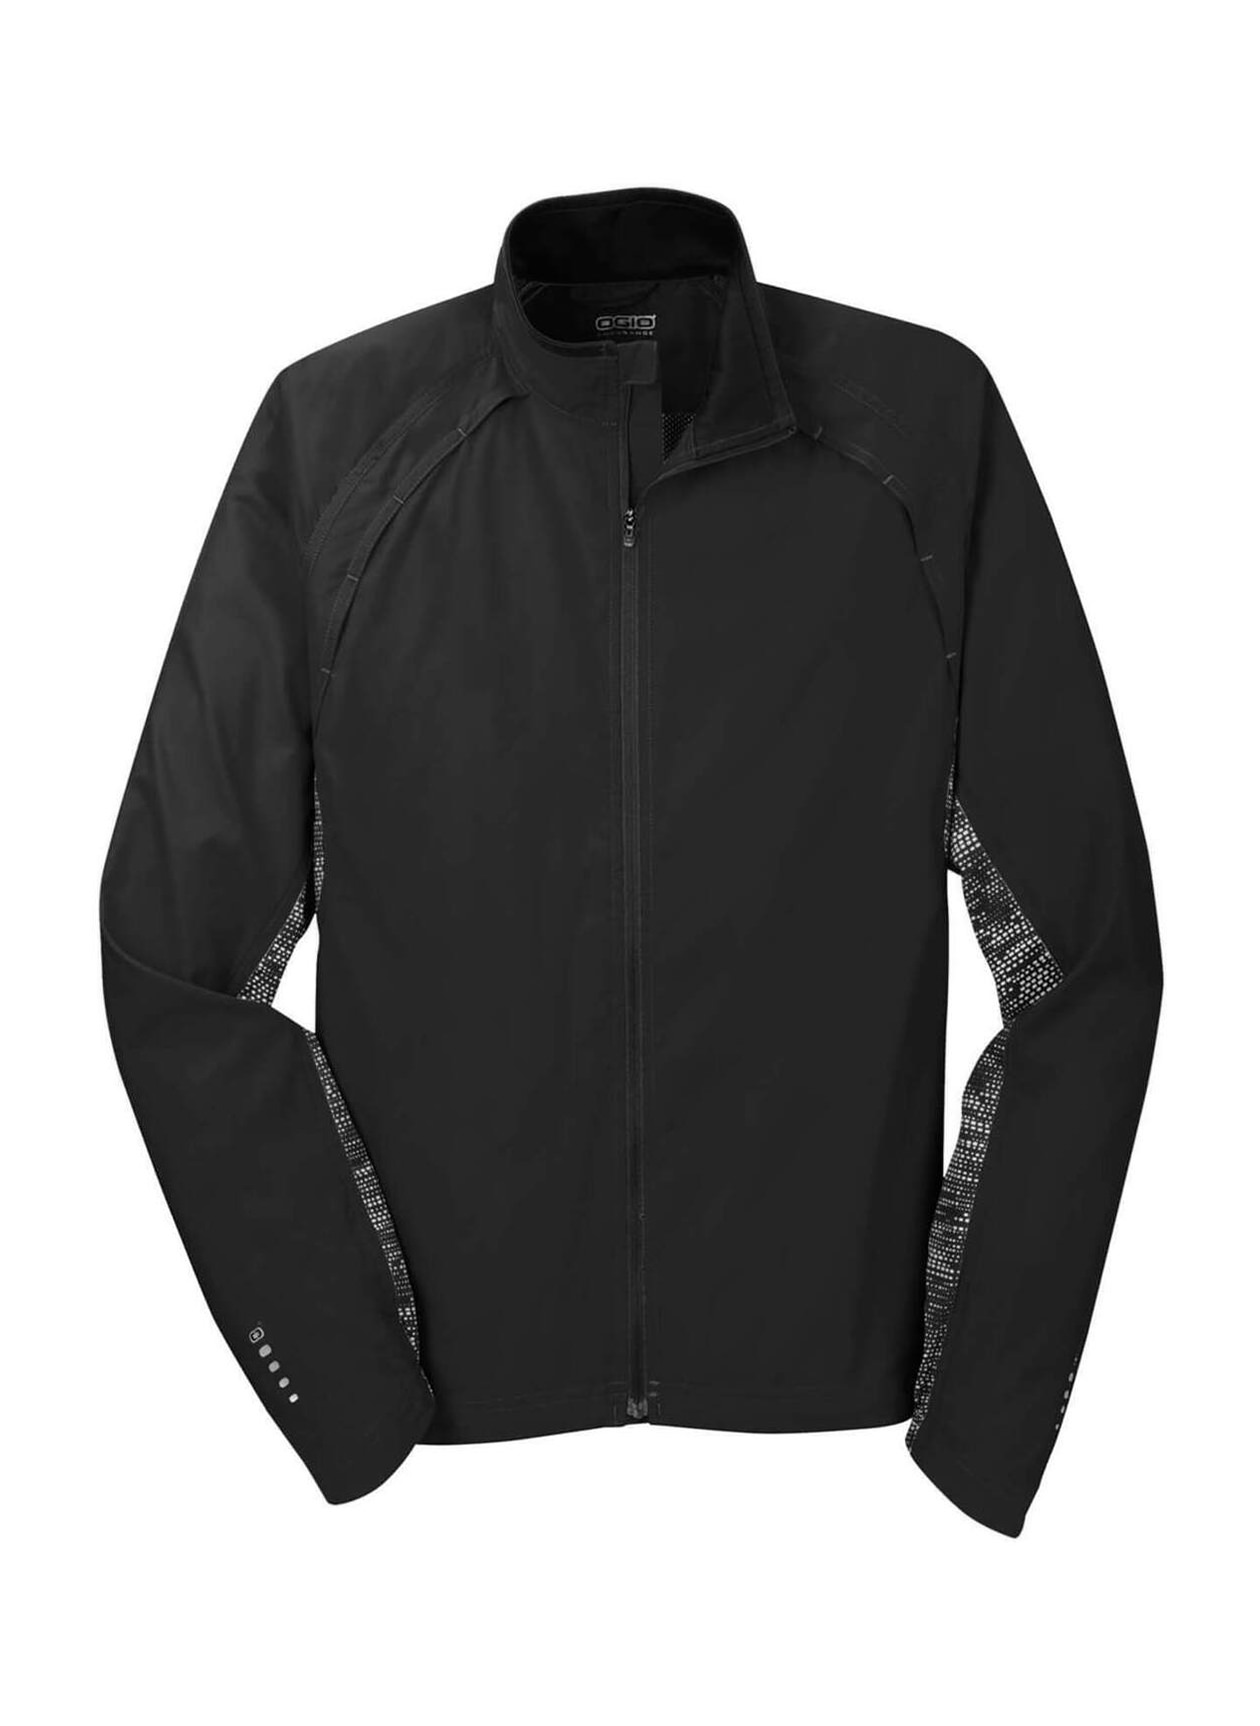 ENDURANCE | Jacket Jackets Men\'s OGIO Corporate Blacktop-Black-Reflective Custom Trainer